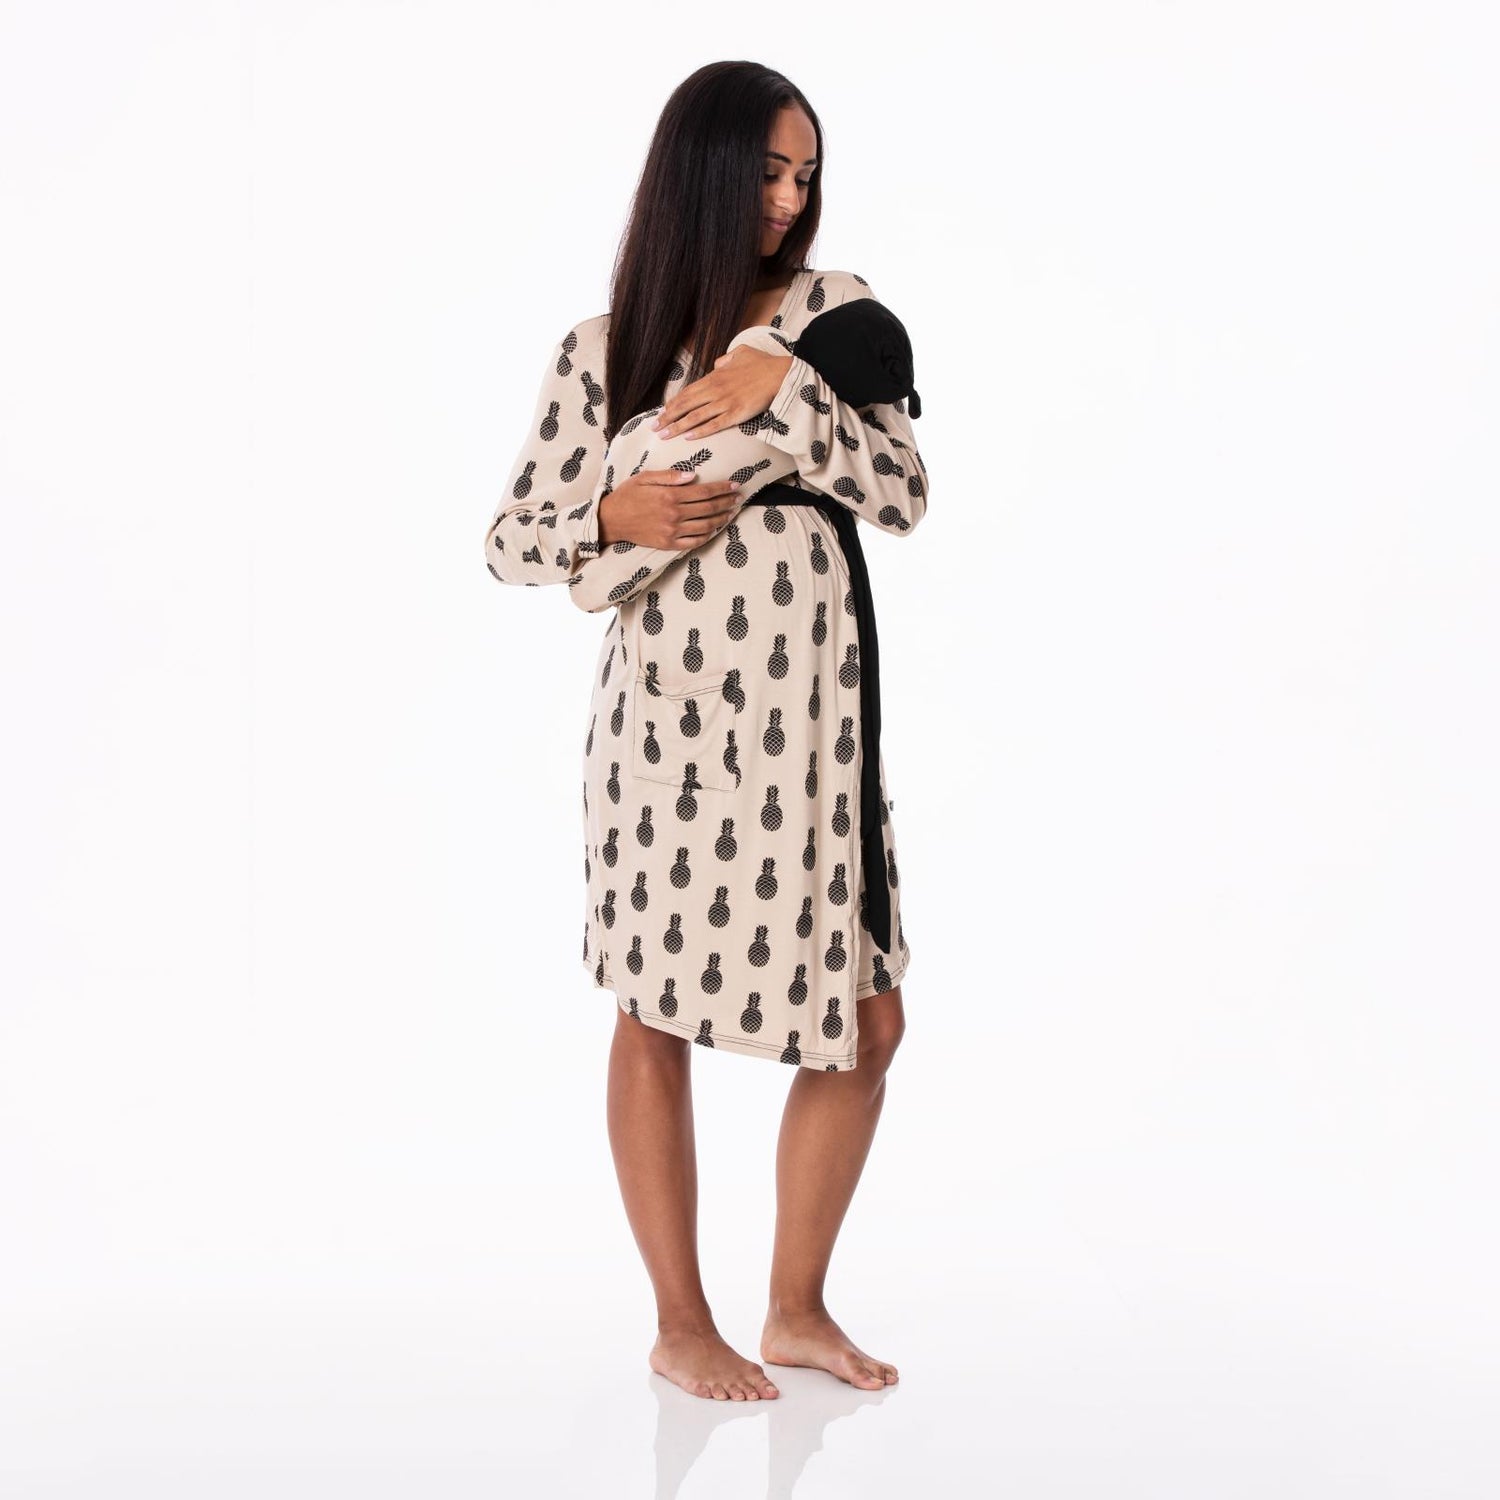 Women's Print Maternity/Nursing Robe &amp; Layette Gown Set in Burlap Pineapples